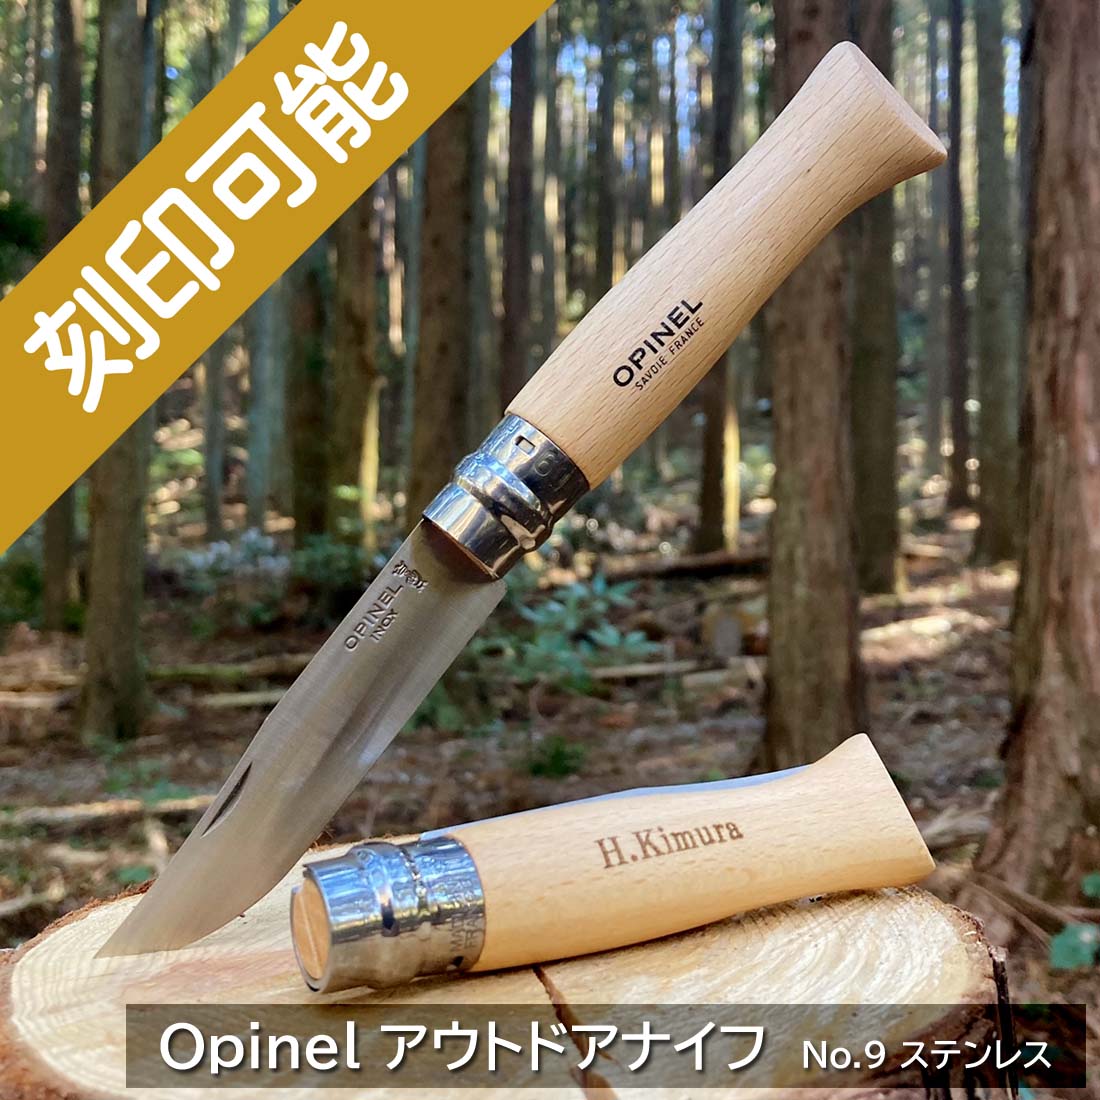 OPINEL No,9 アウトドア・ナイフ